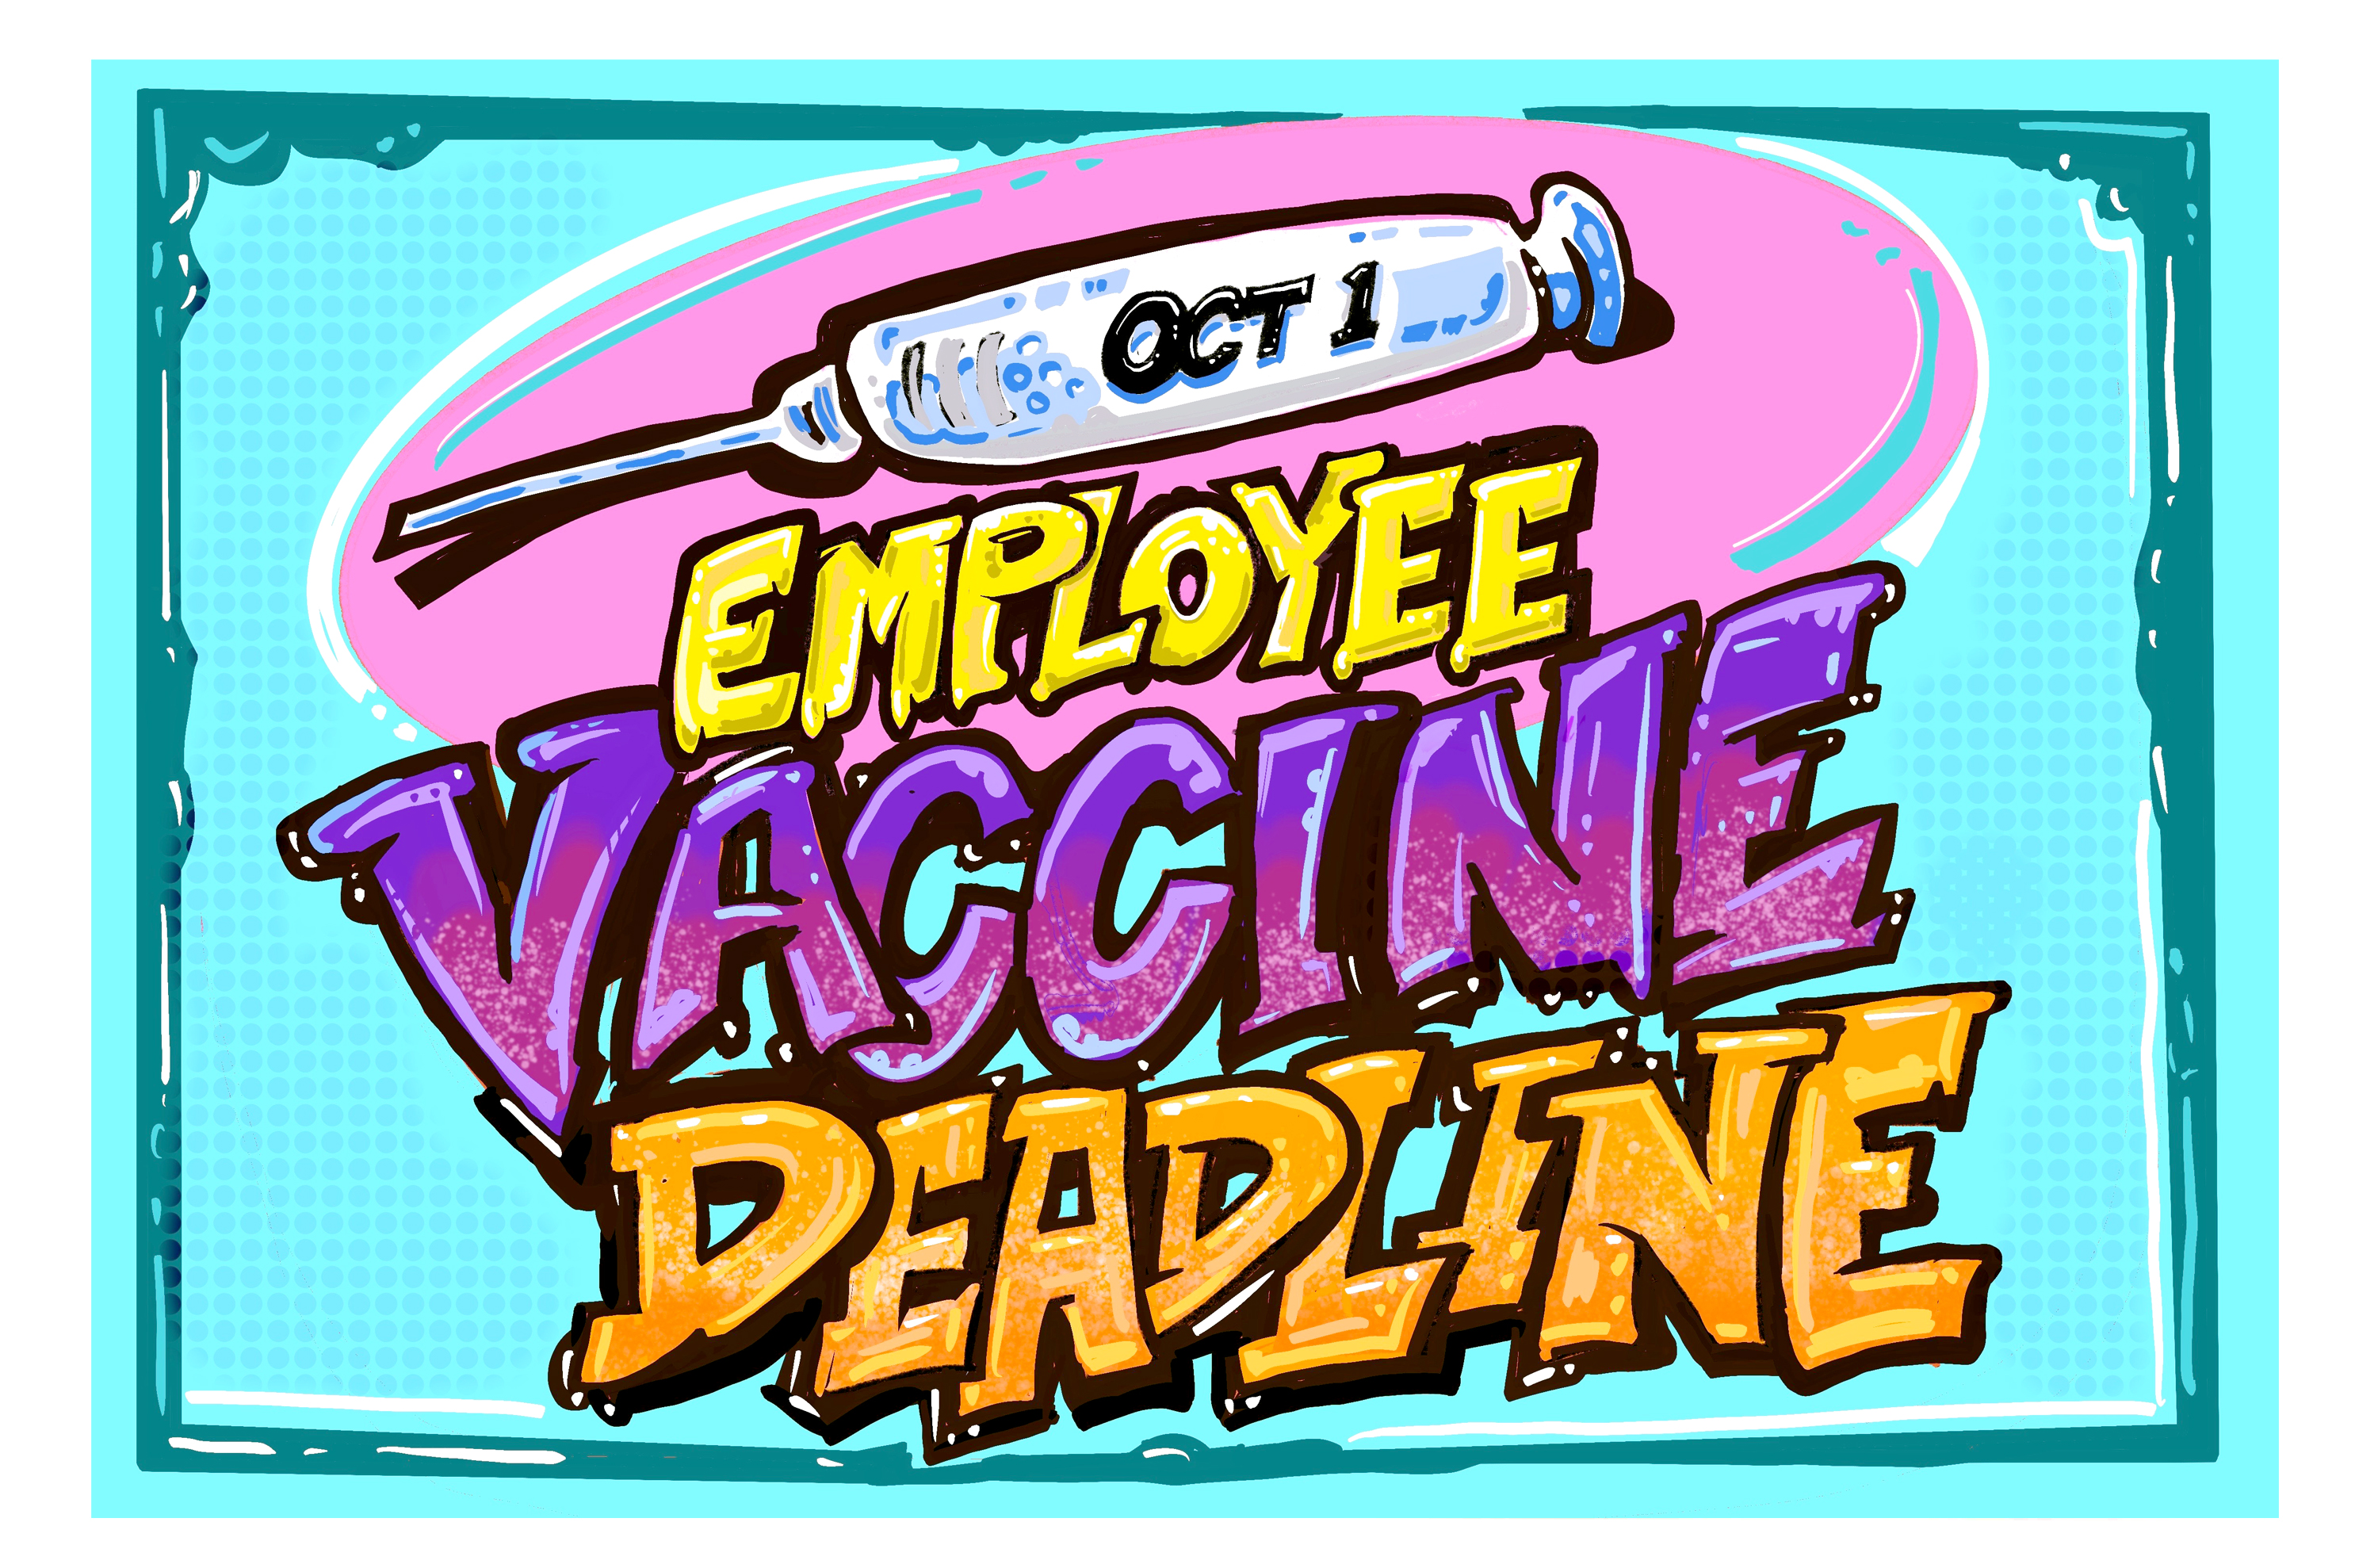 Digital painting that says "Oct 1 Employee Vaccine Deadline"